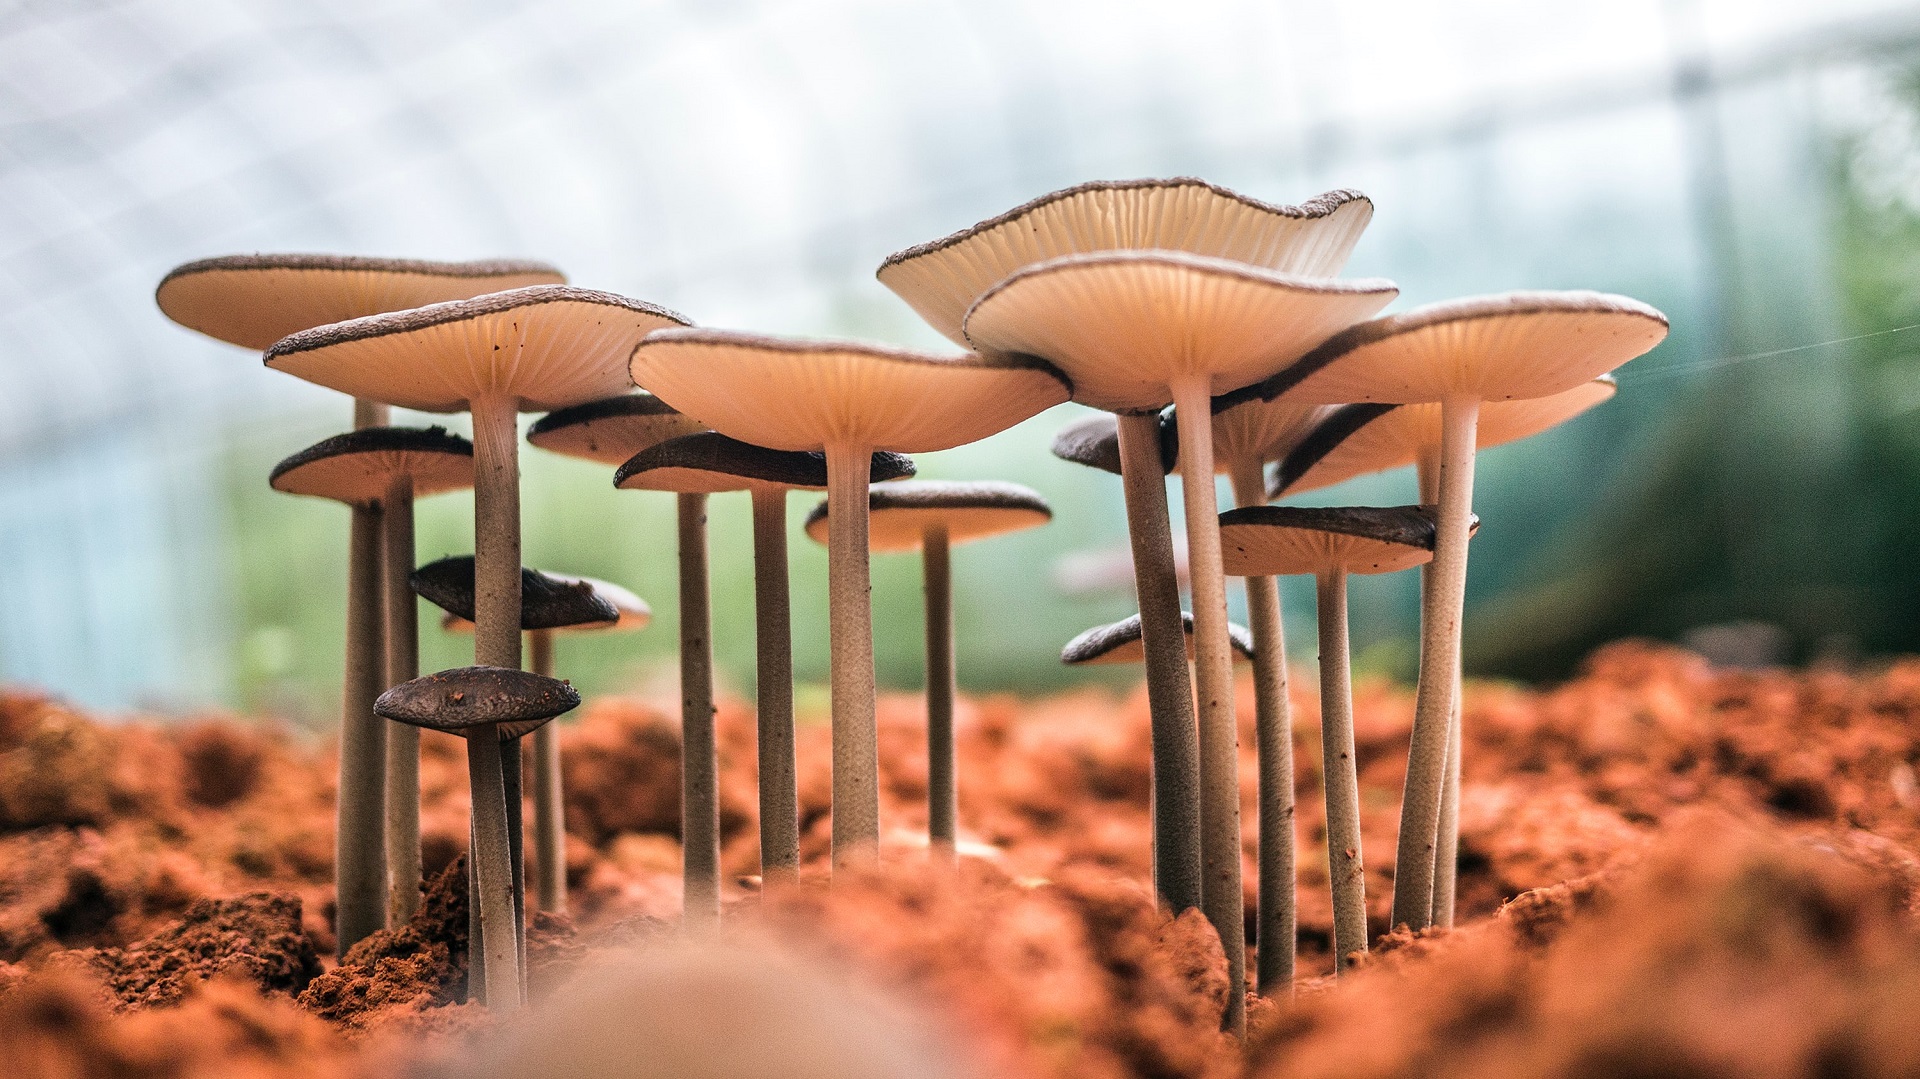 backyard mushroom farming